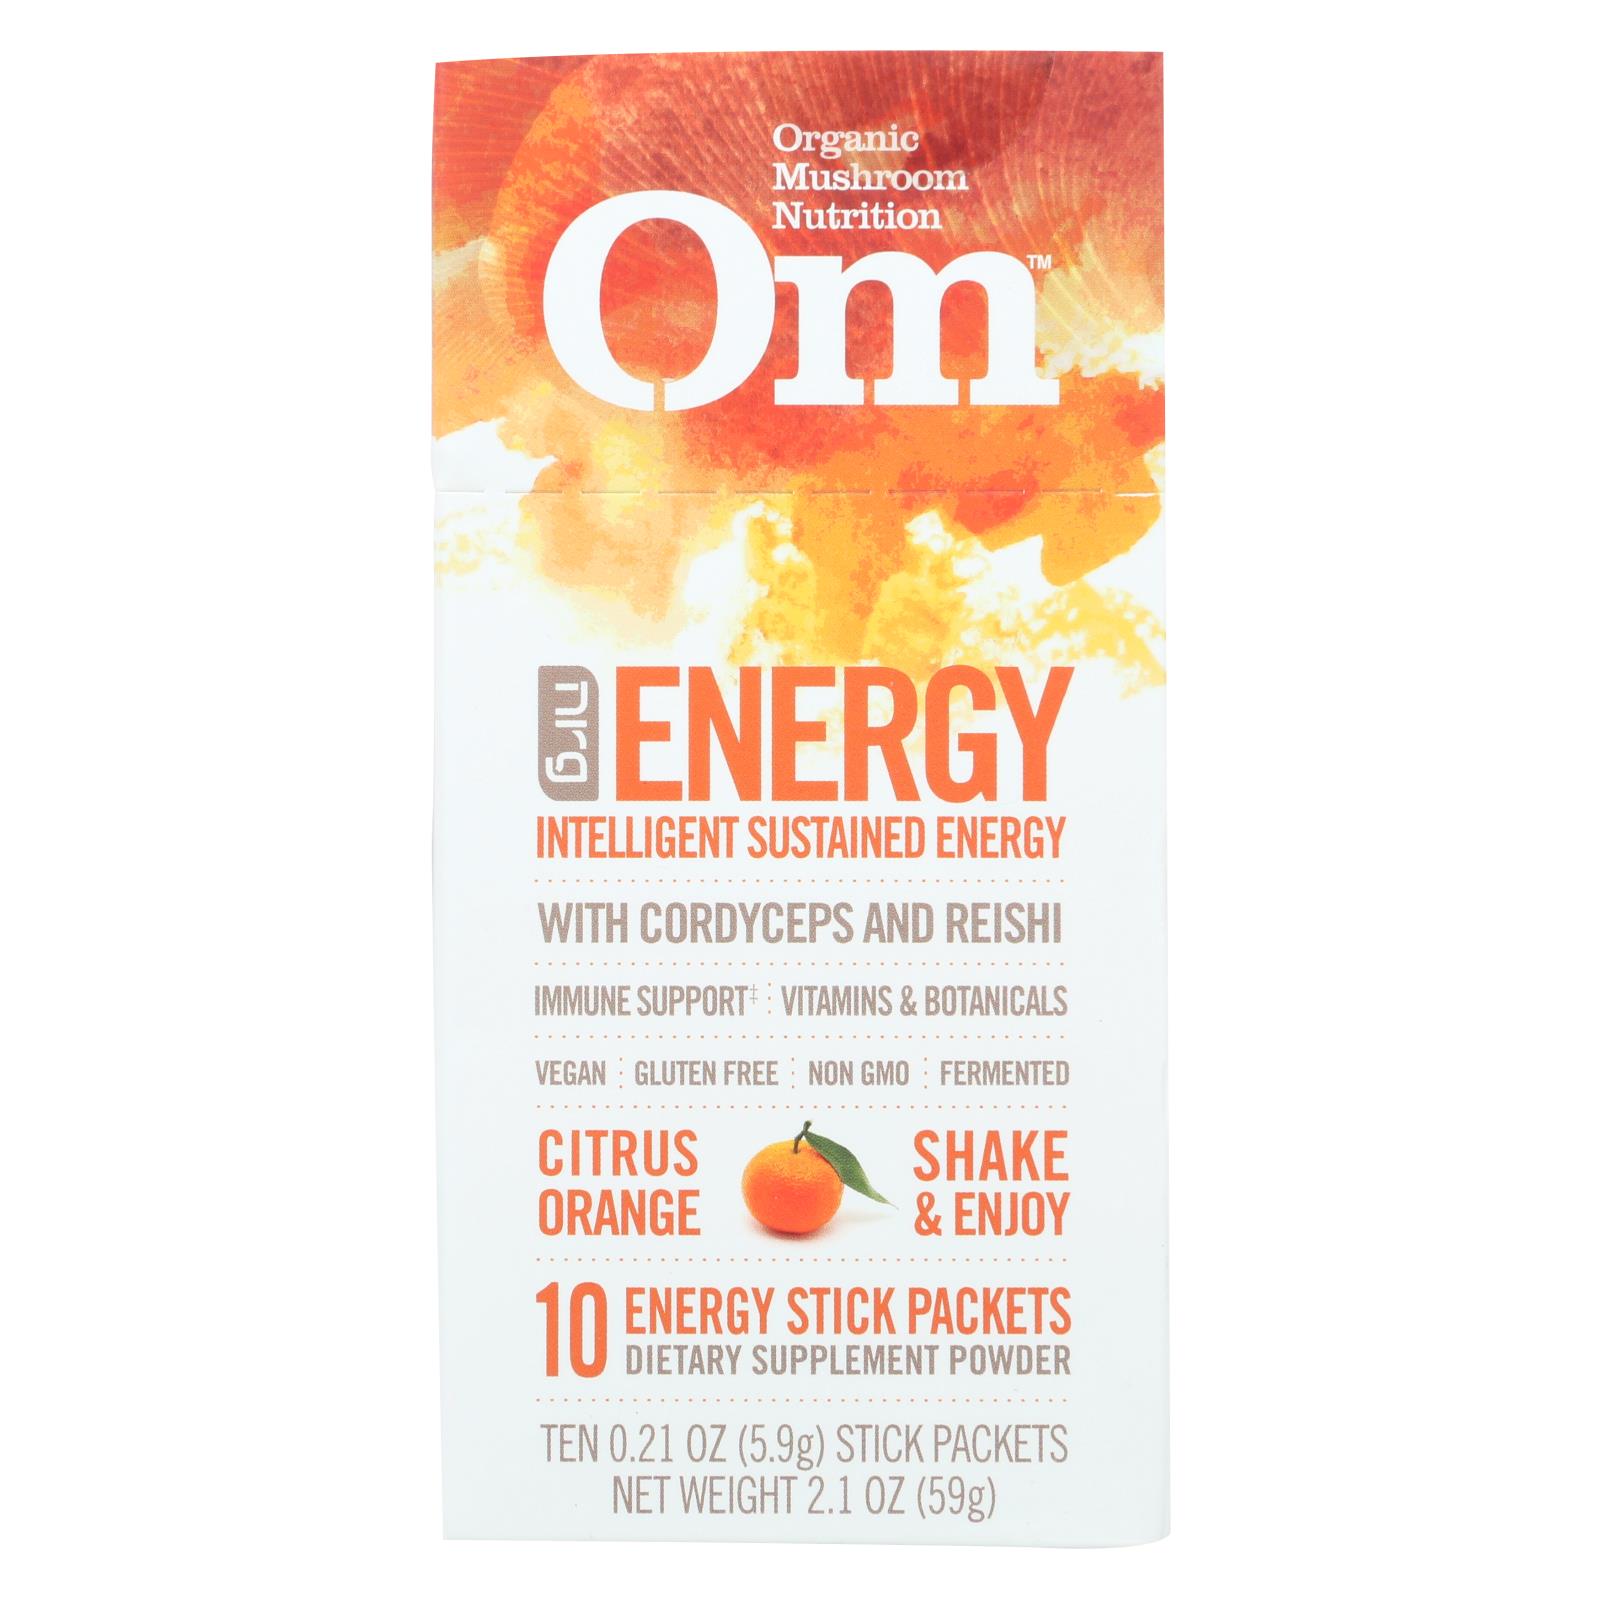 Om Organic Mushroom Nutrition Energy Citrus Orange Dietary Supplement Powder - 10개 묶음상품 - .21 OZ